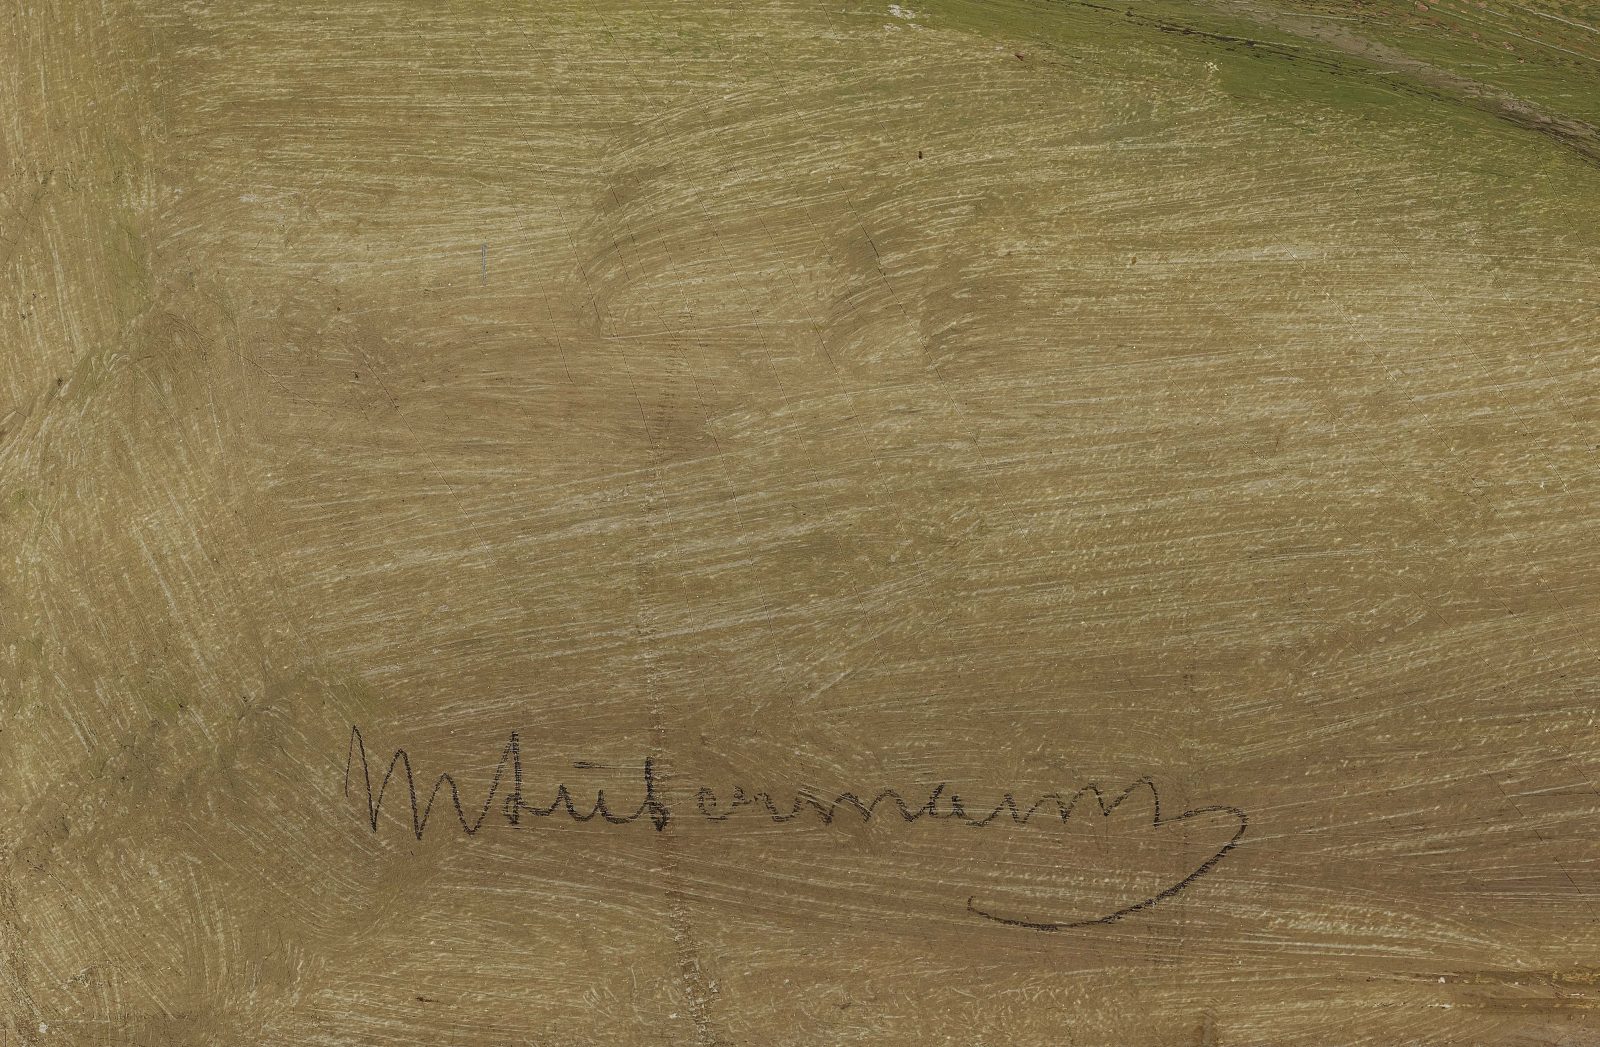 Max Liebermann - Image 5 of 5